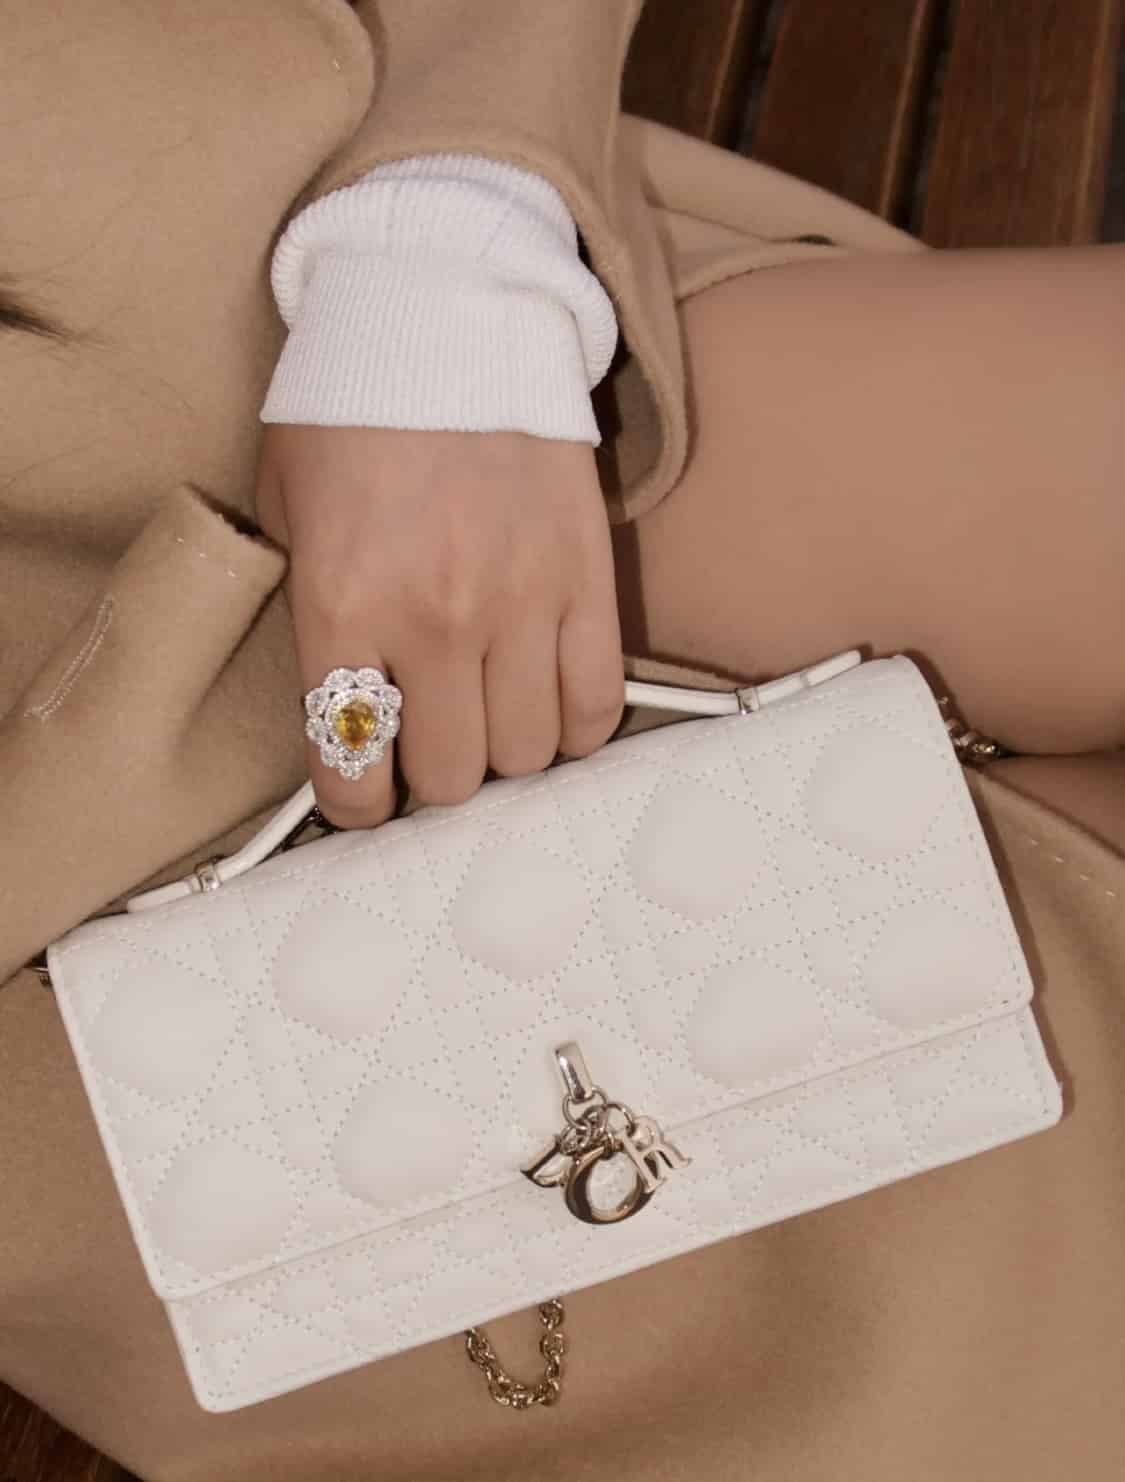 Buy Miss Wish Cream Color PU Solid Handbag For Women, Girls at Amazon.in